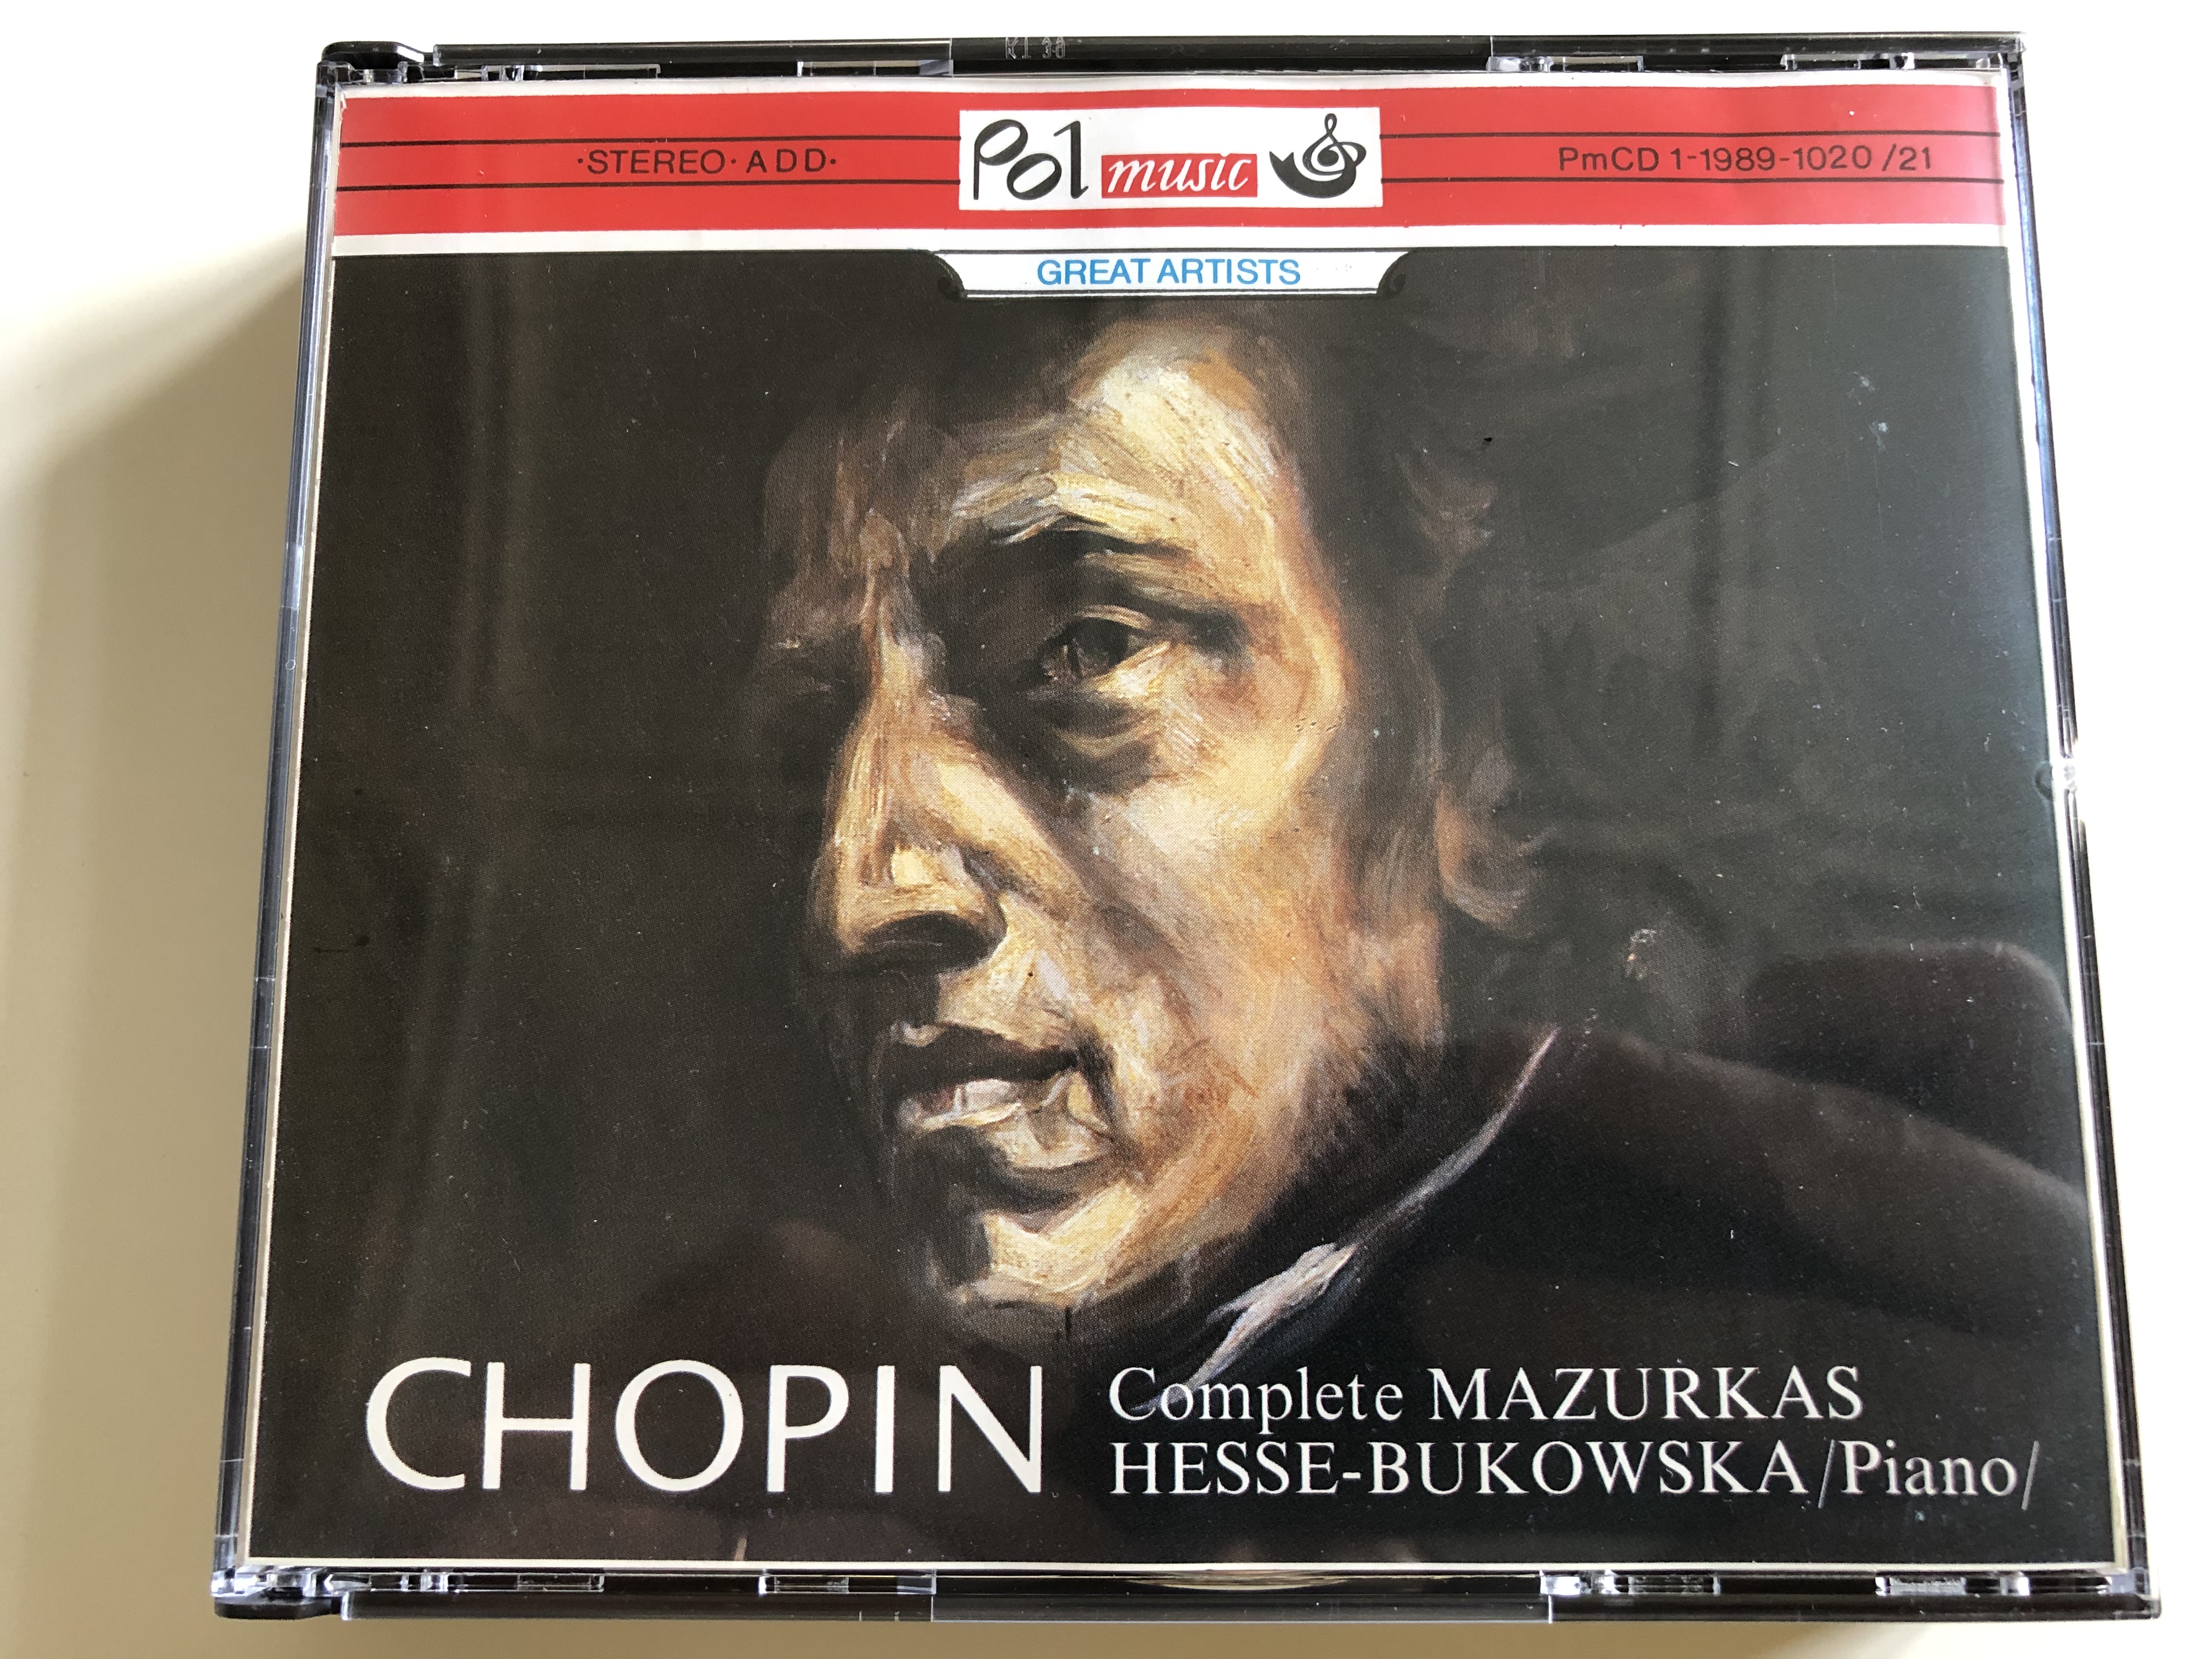 chopin-complete-mazurkas-barbara-hessse-bukowska-piano-pol-music-great-artists-pmcd-1-1989-102021-audio-cd-1990-2-discs-1-.jpg